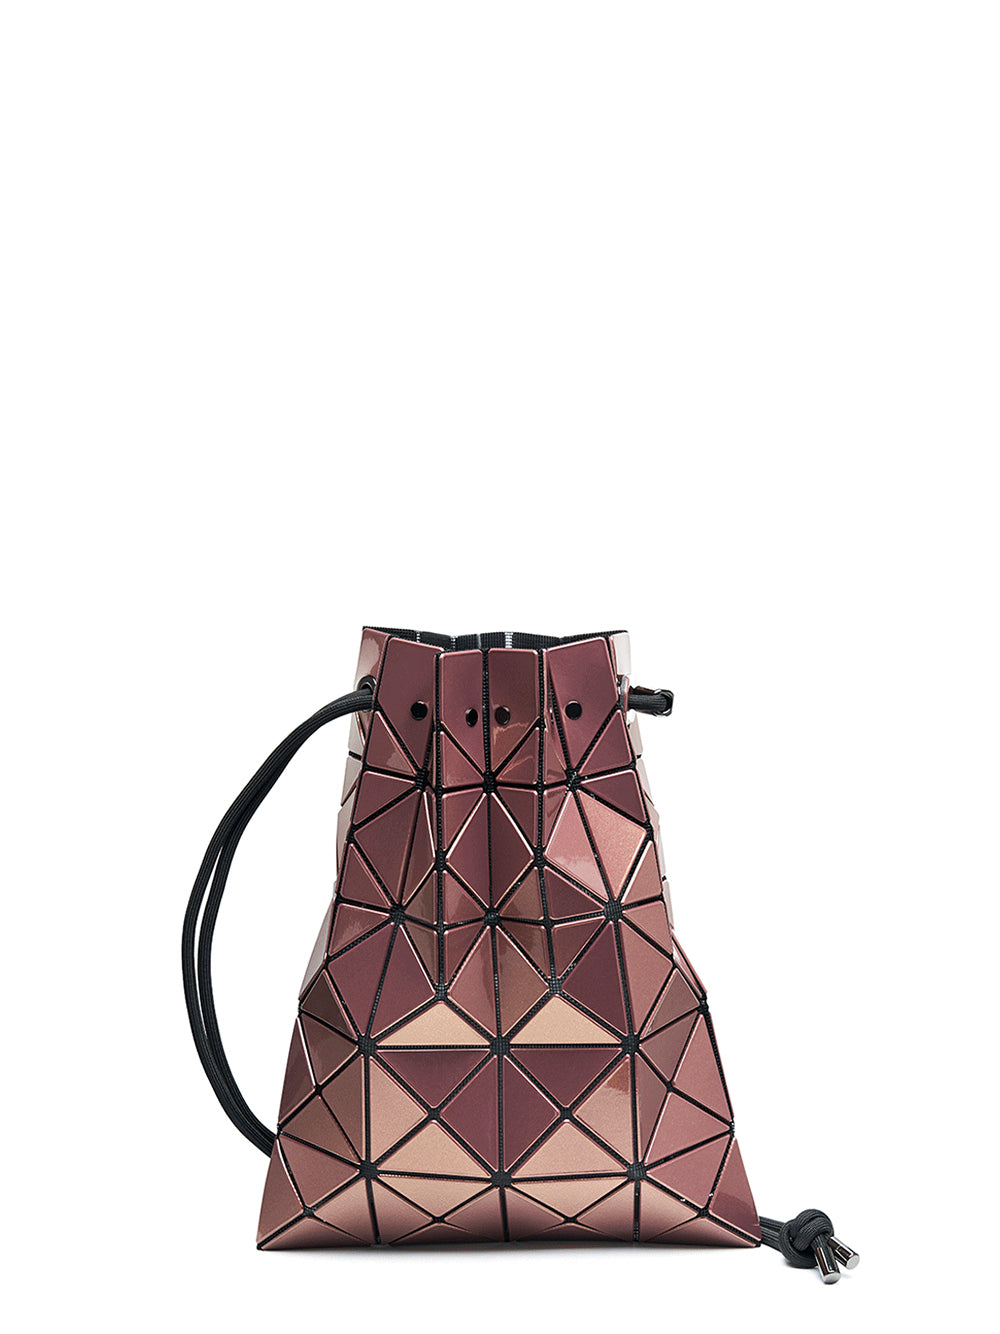 LUCENT METALLIC Mini Handbag (Brown)